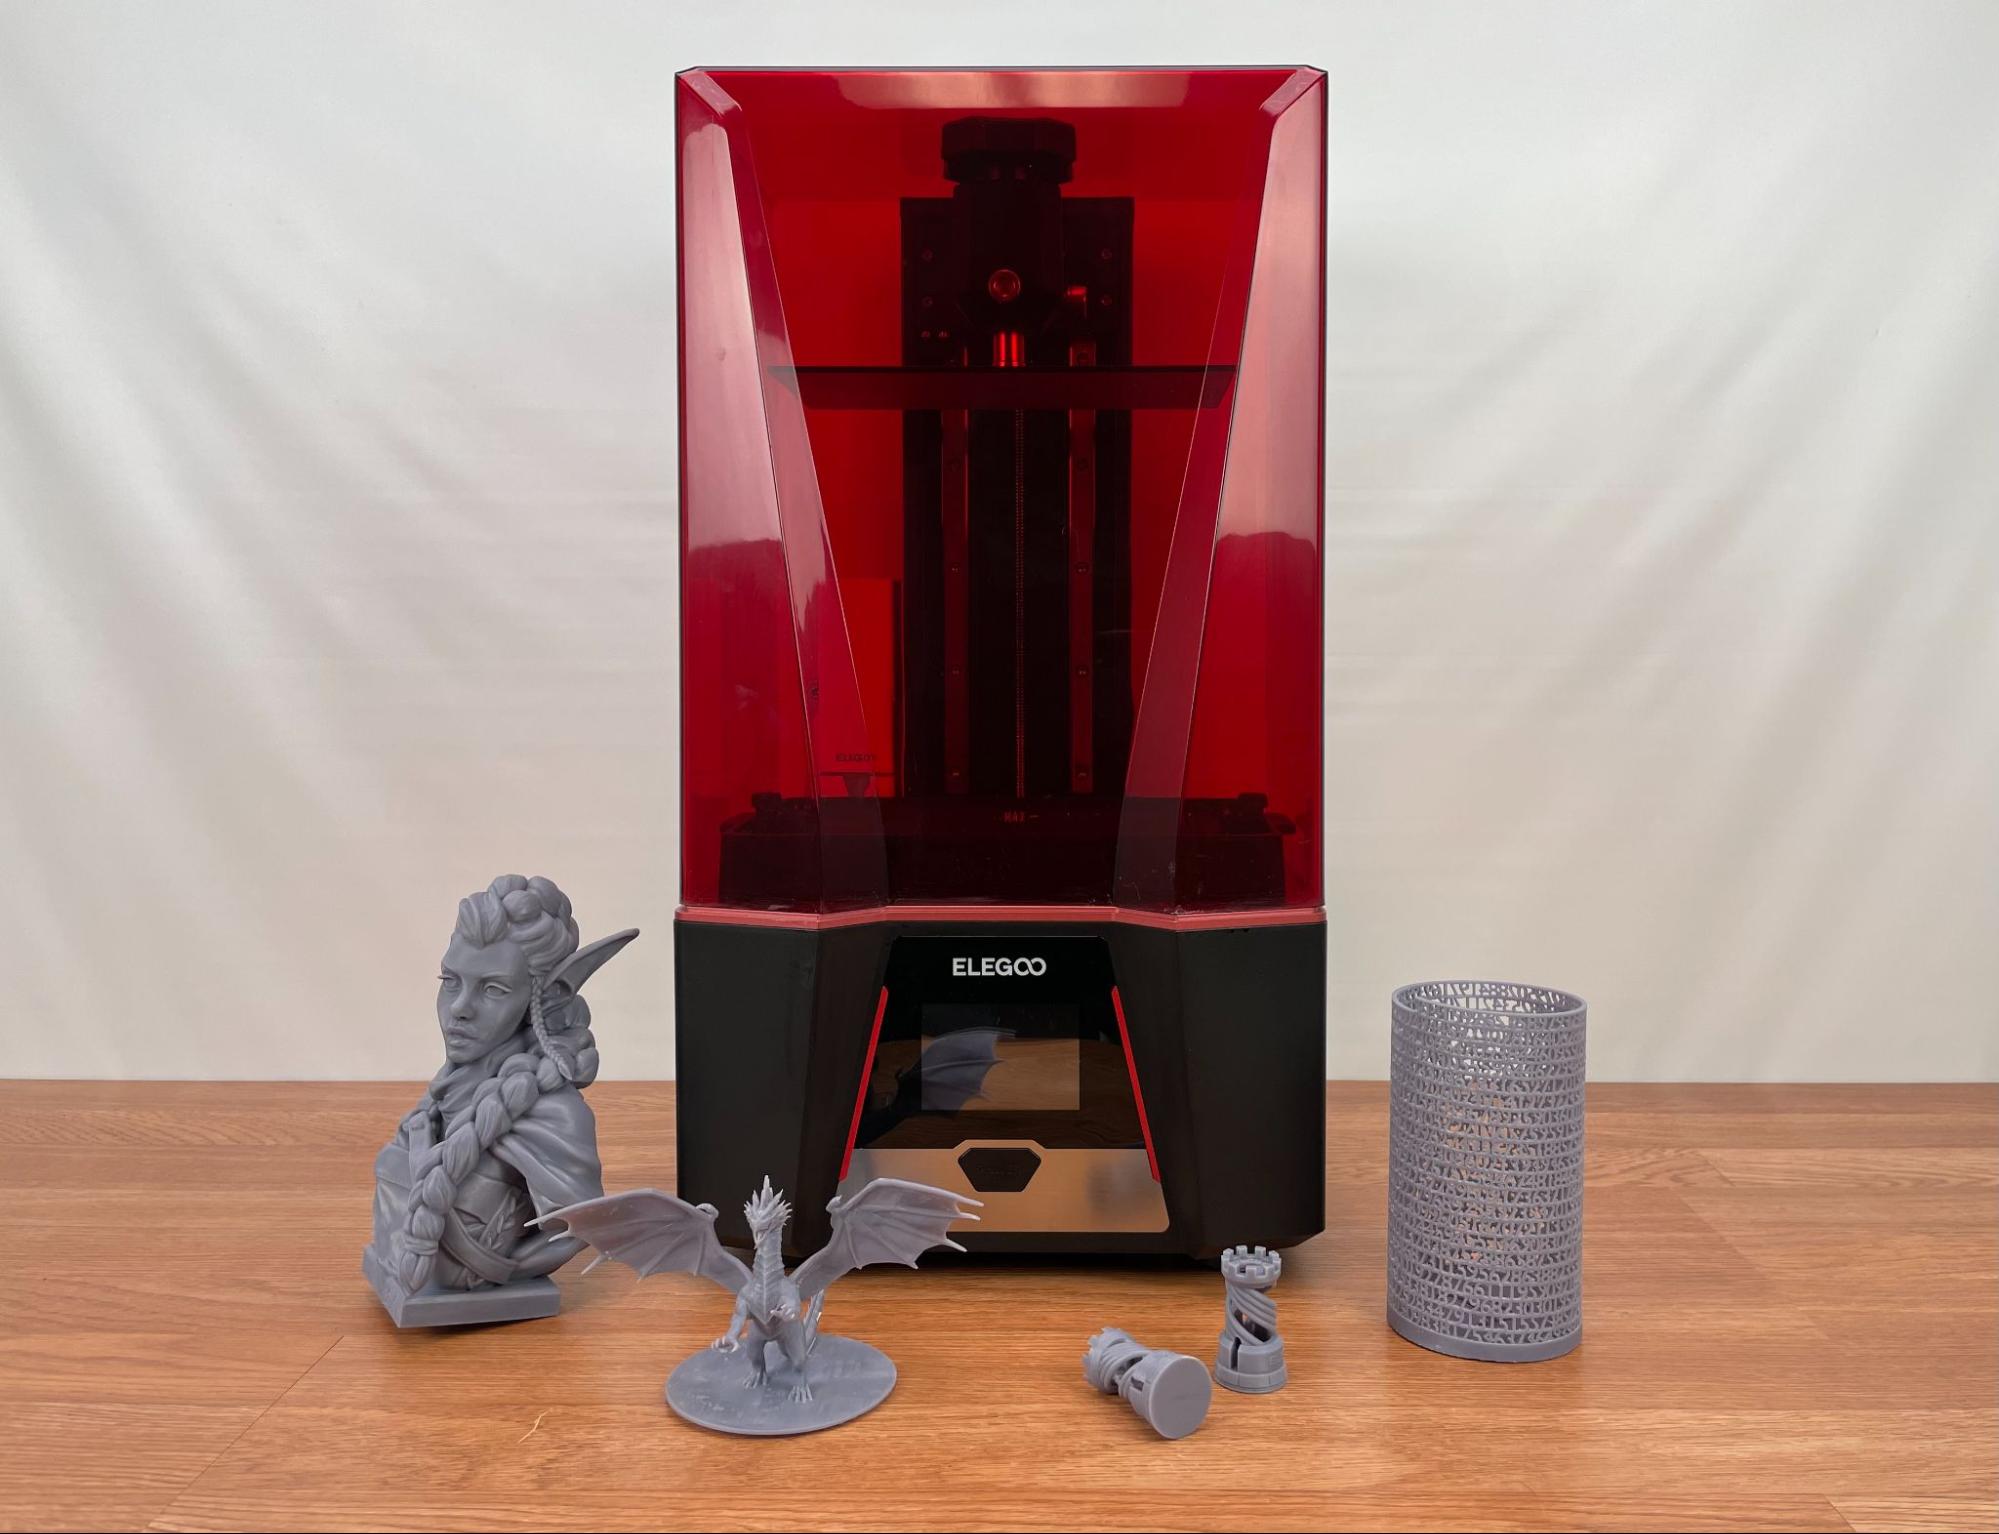 Elegoo Saturn 2 8K Resin 3D Printer: An In-depth Look